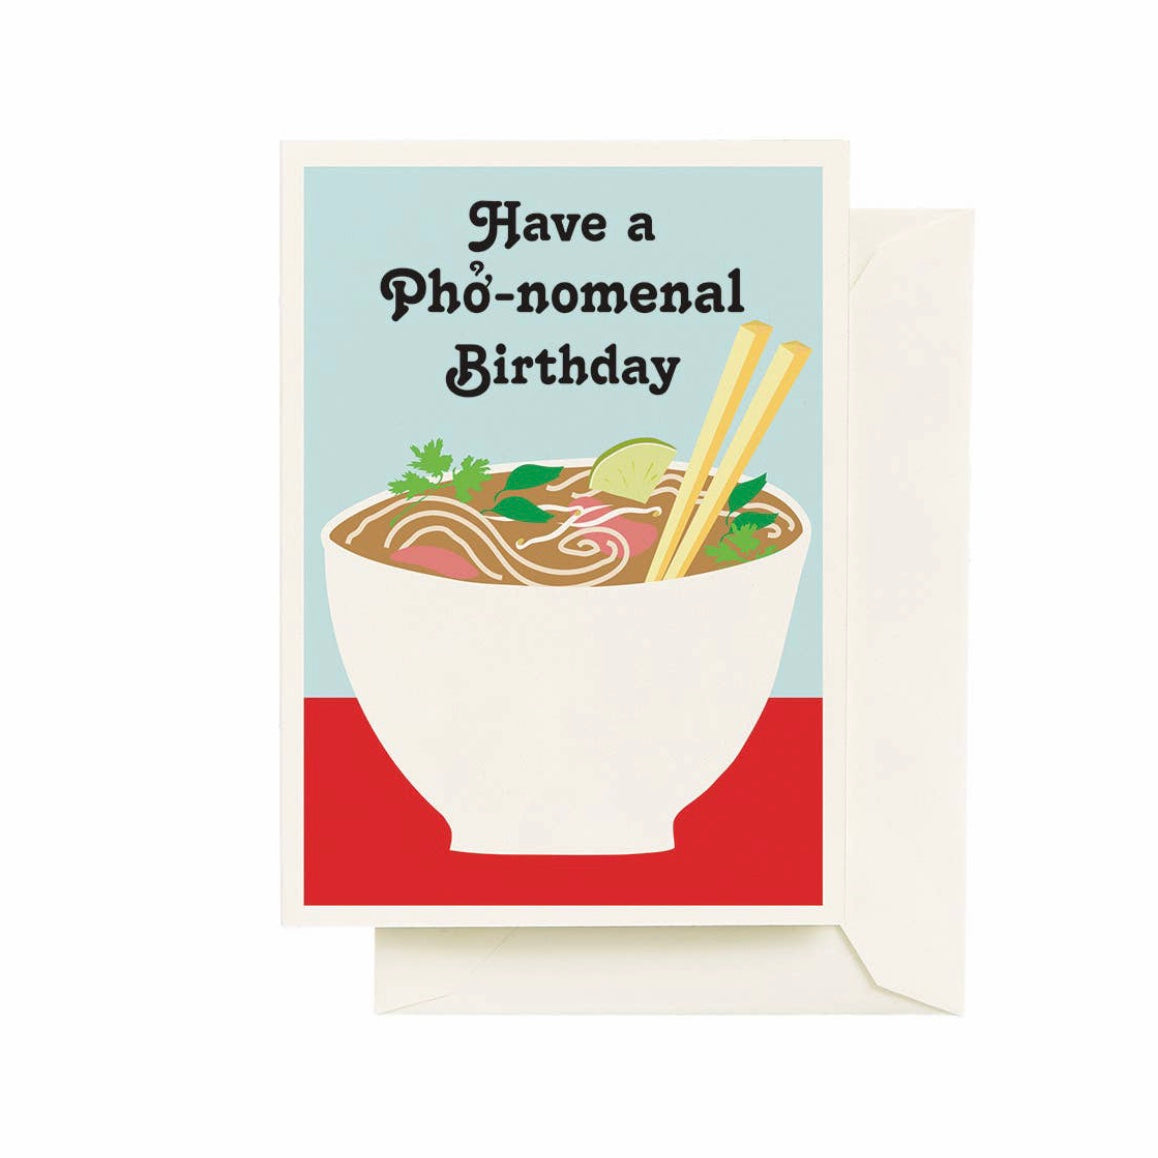 Have a Pho-nomenal Birthday greeting card